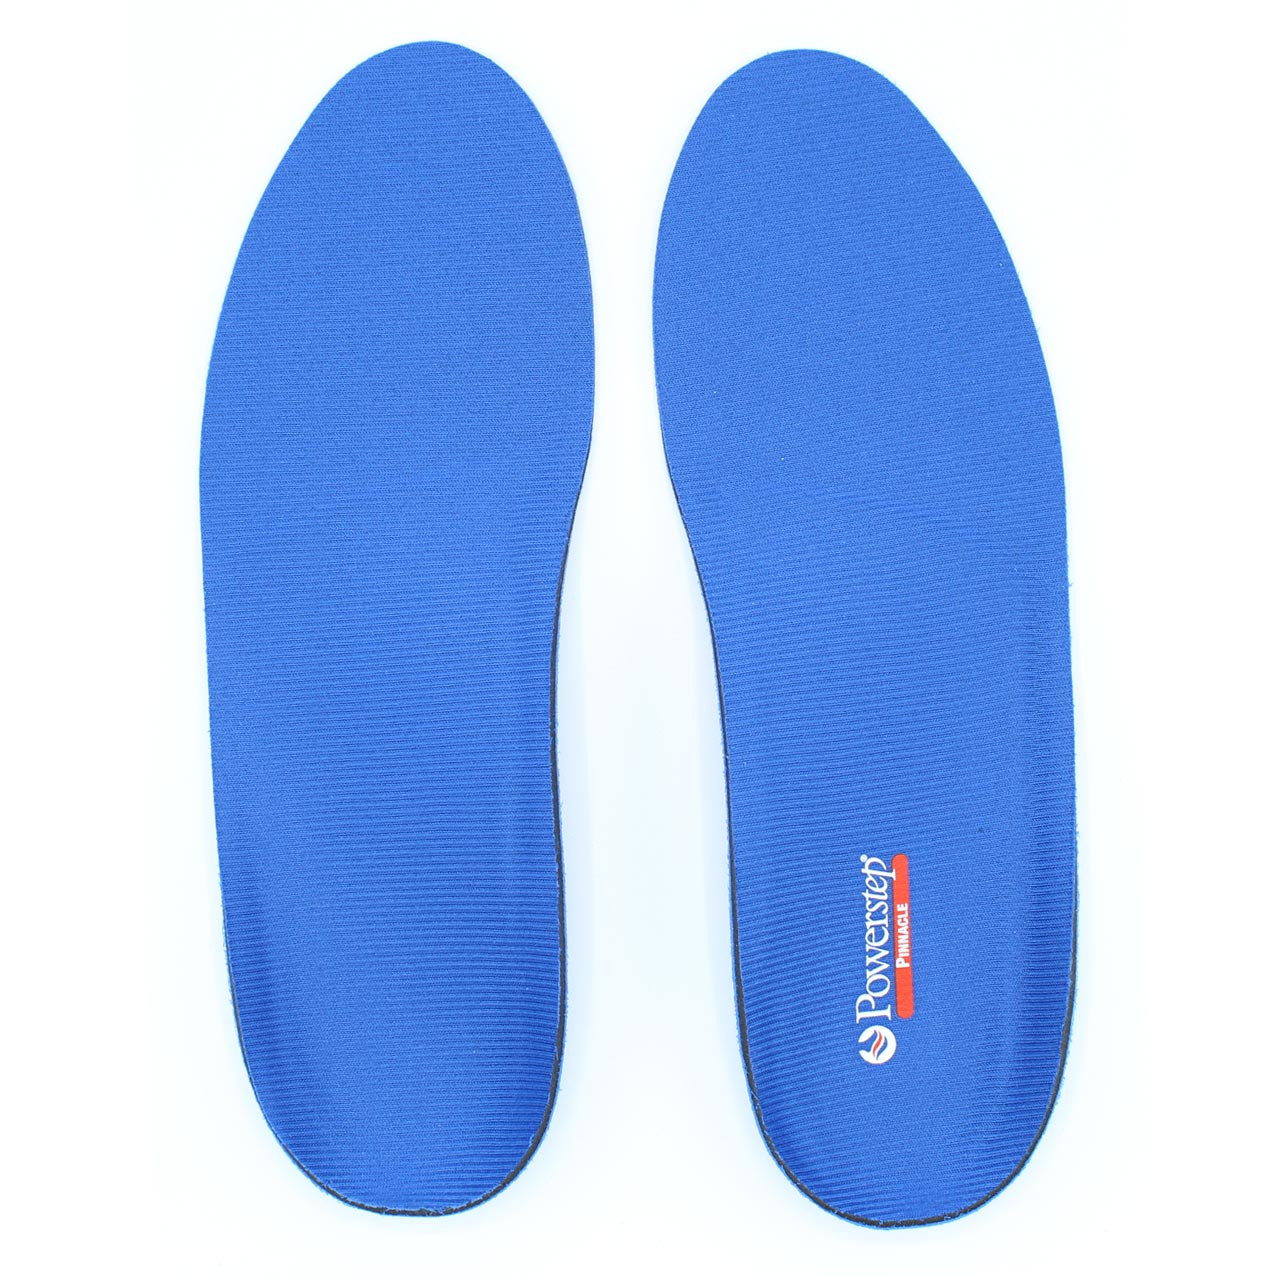 Powerstep Pinnacle Premium Full Orthotic Shoe Insoles (Blue)